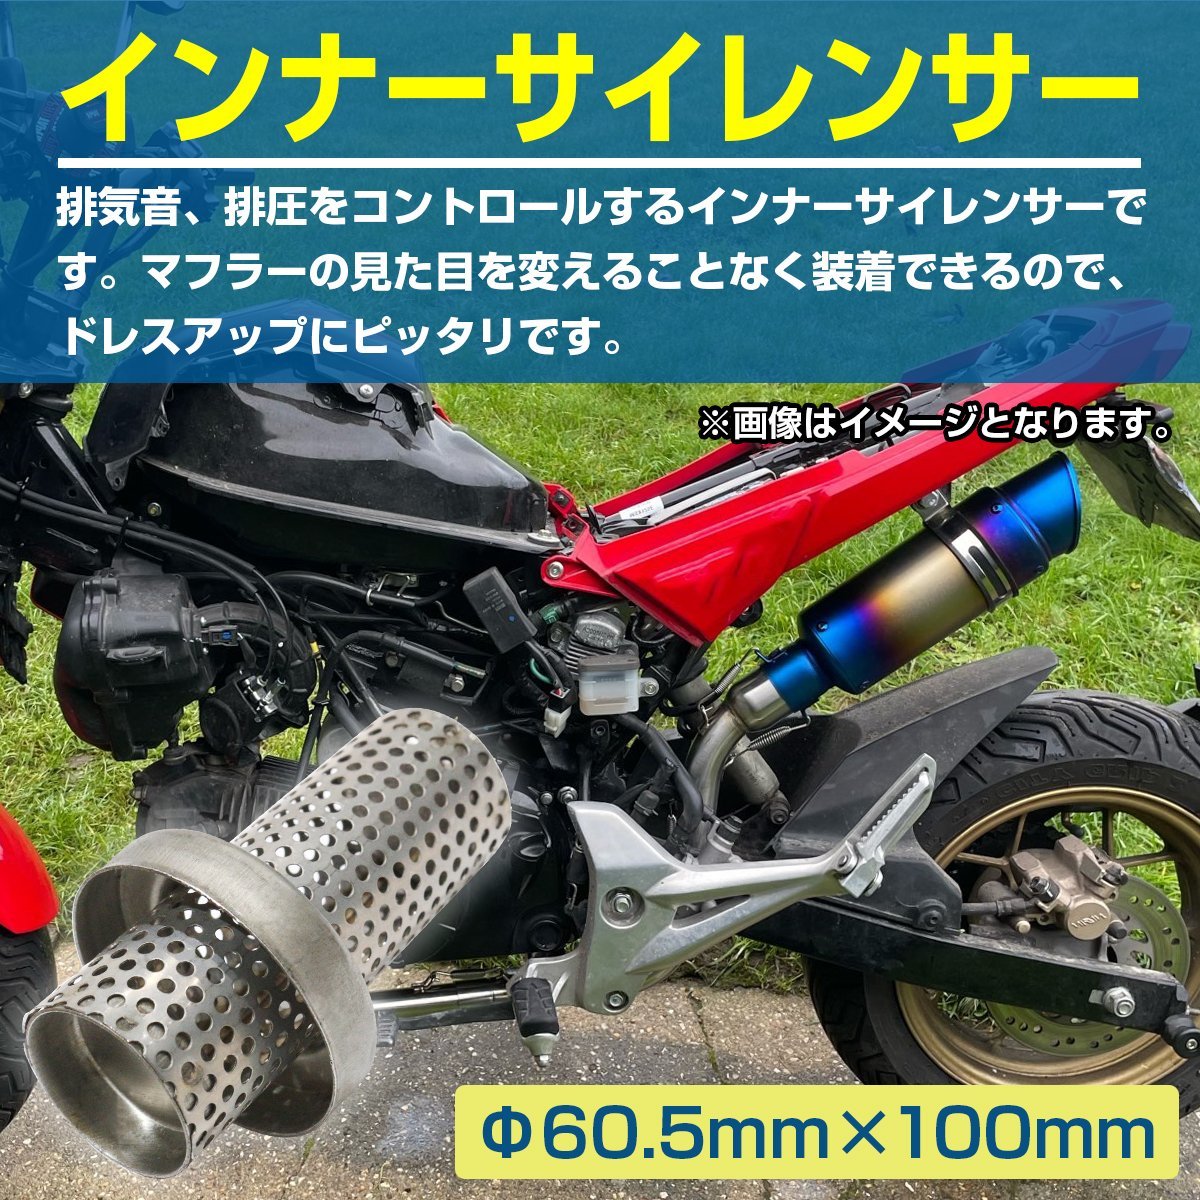 60.5mm 汎用 バイク インナー サイレンサー 100mm/60.5 インナー バッフル 消音 排気 音量調整 ステンレス製 マフラー_bik-a-024-e-01-s